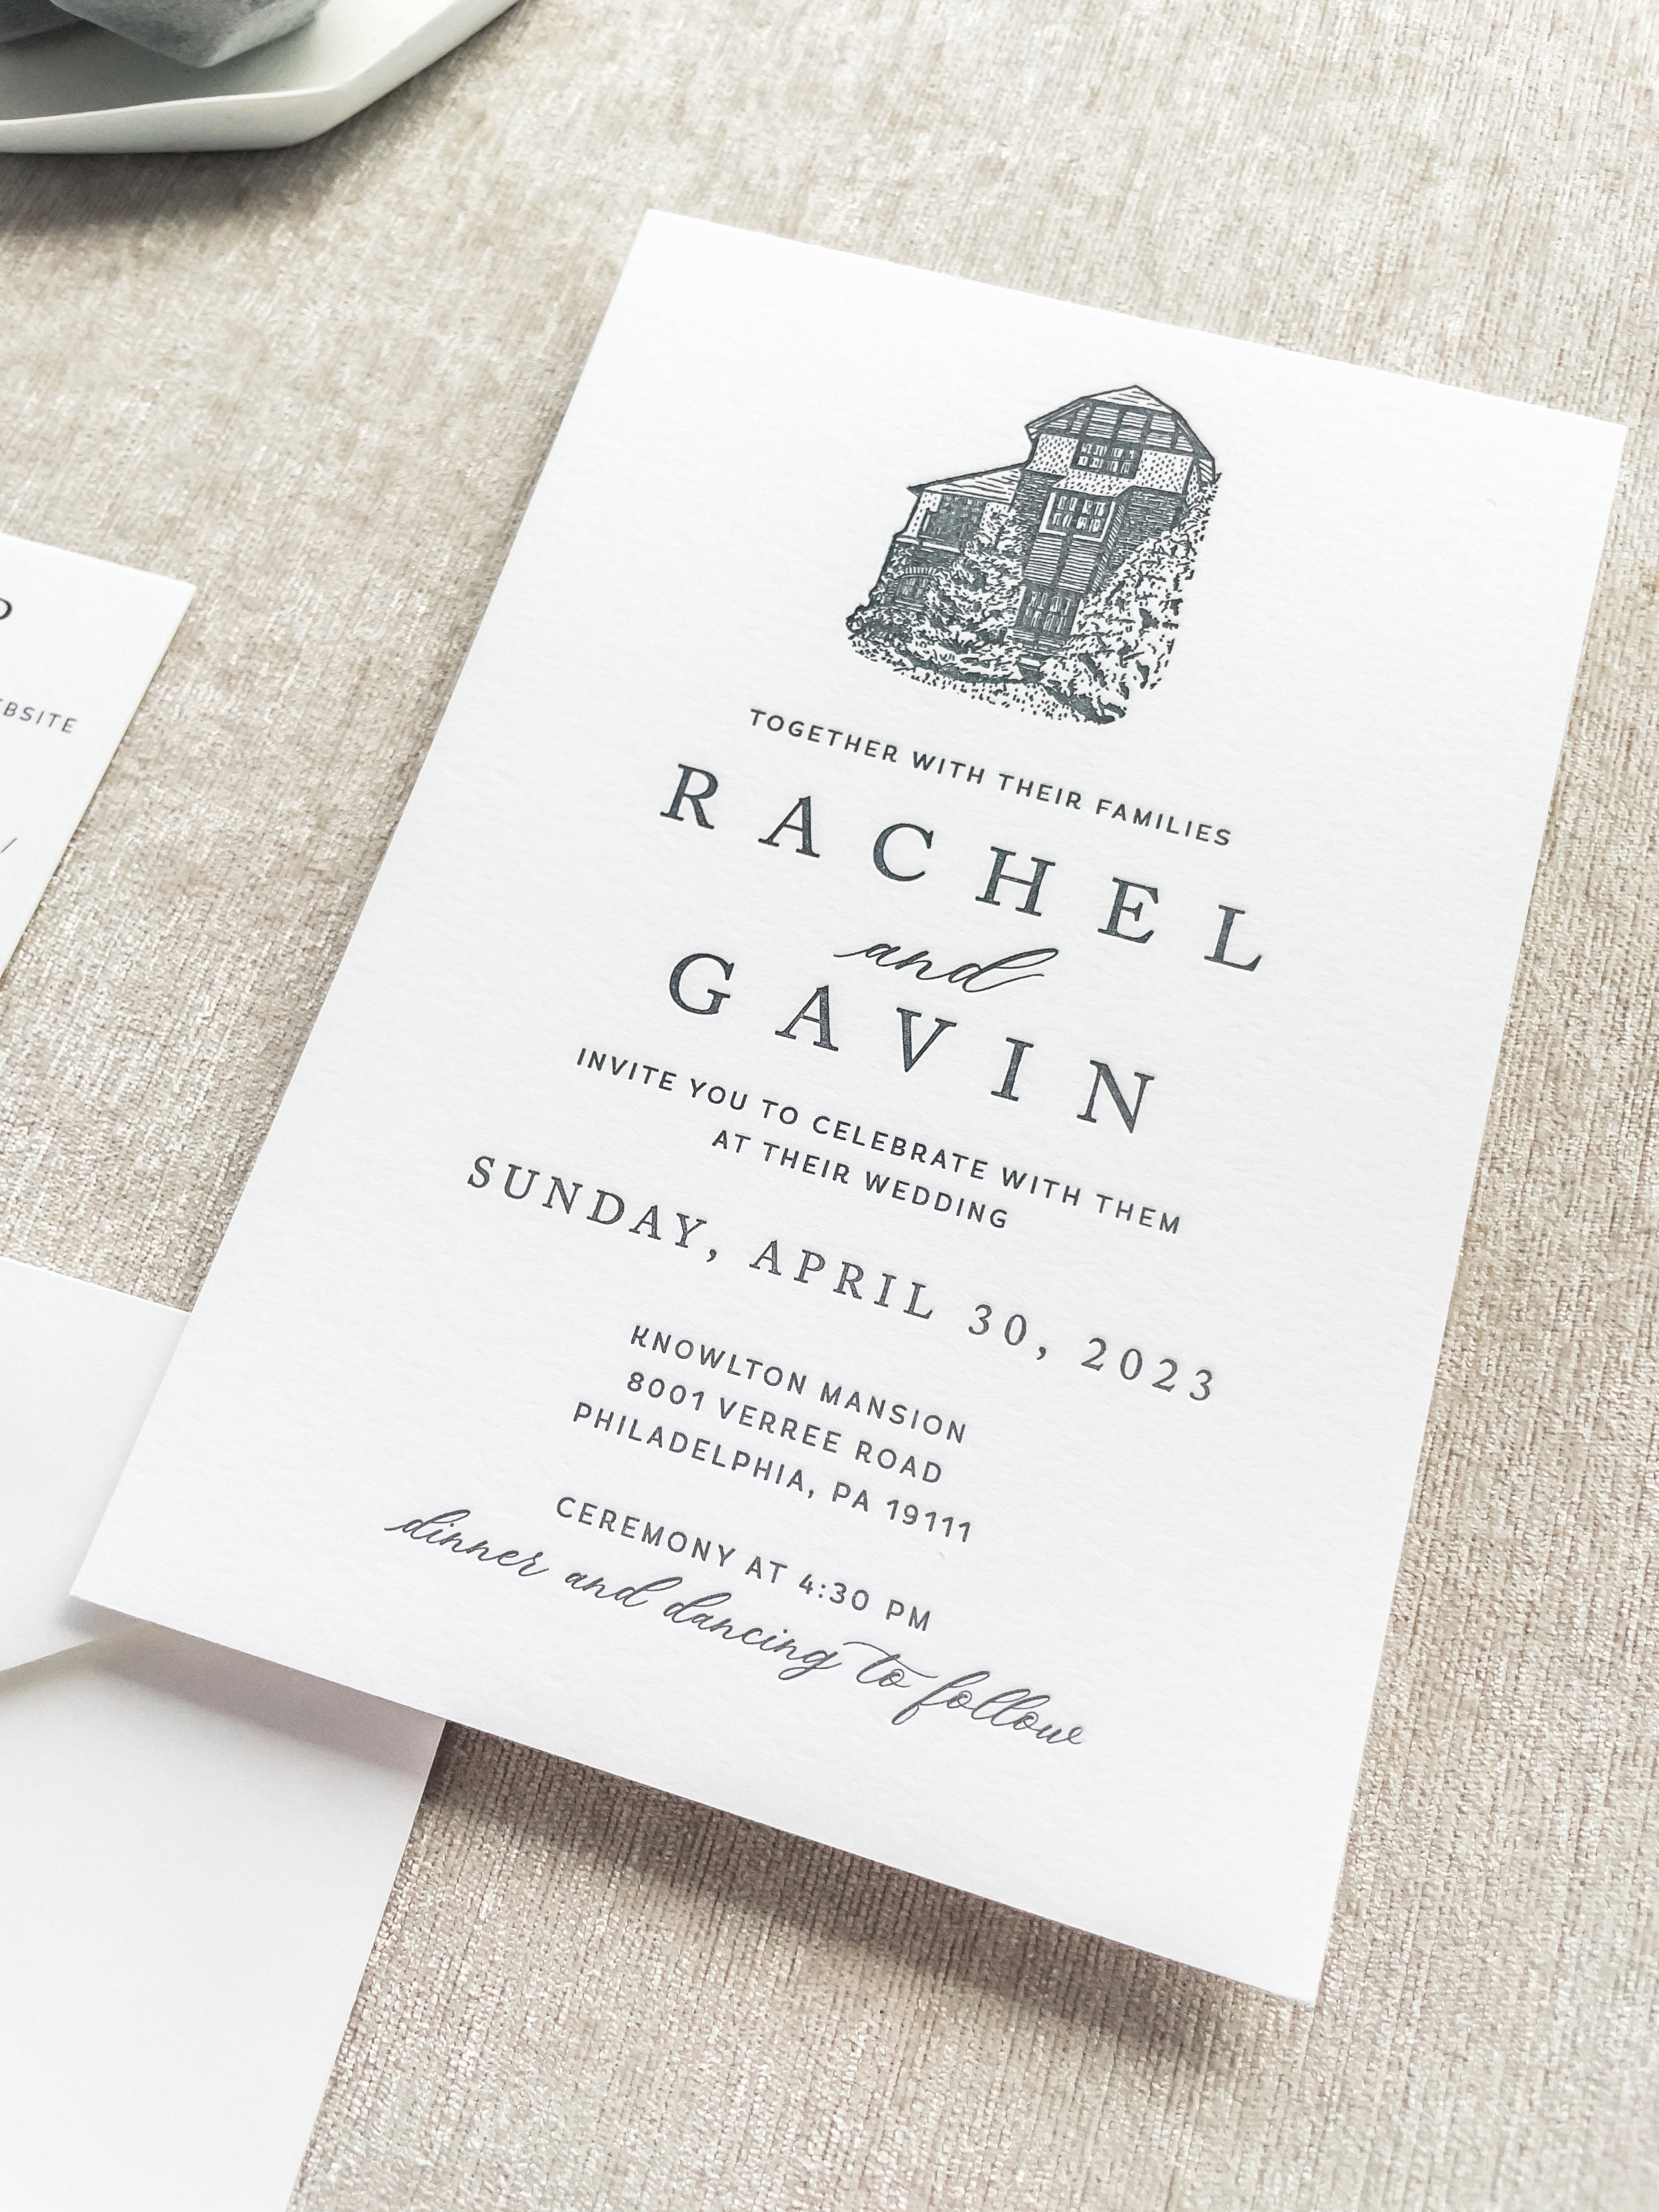 Anthology Print Wedding Invitations - Gatefolding wedding invitations - gold foil wedding invites12.jpg